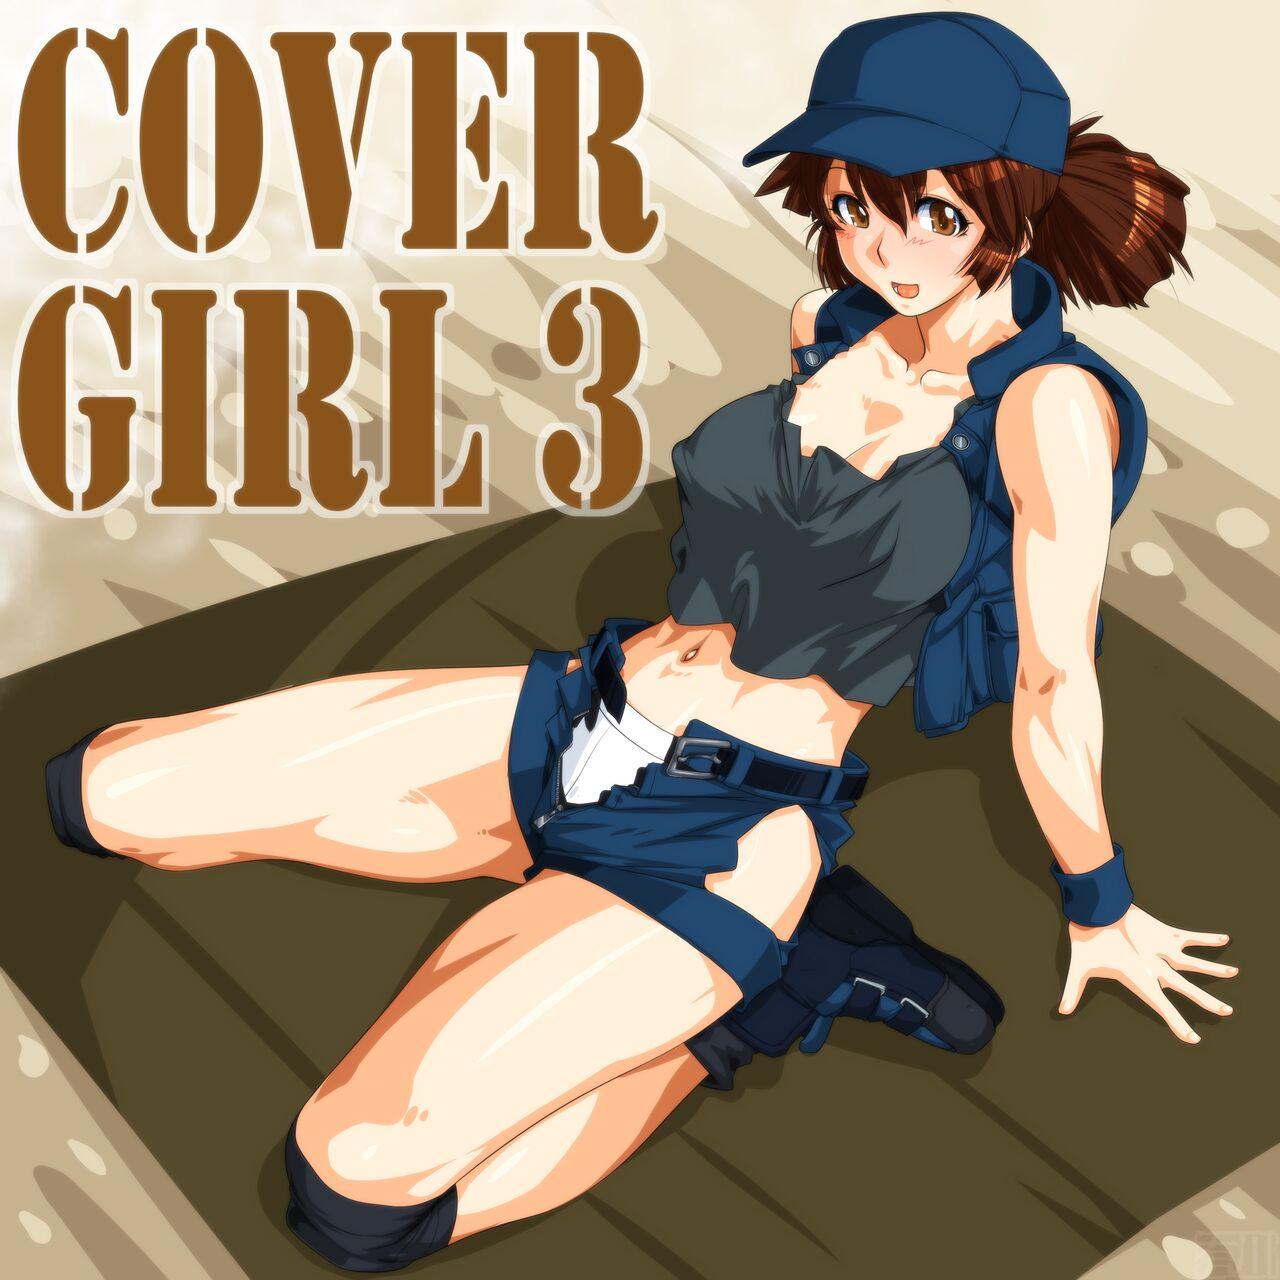 COVER GIRL 3 16